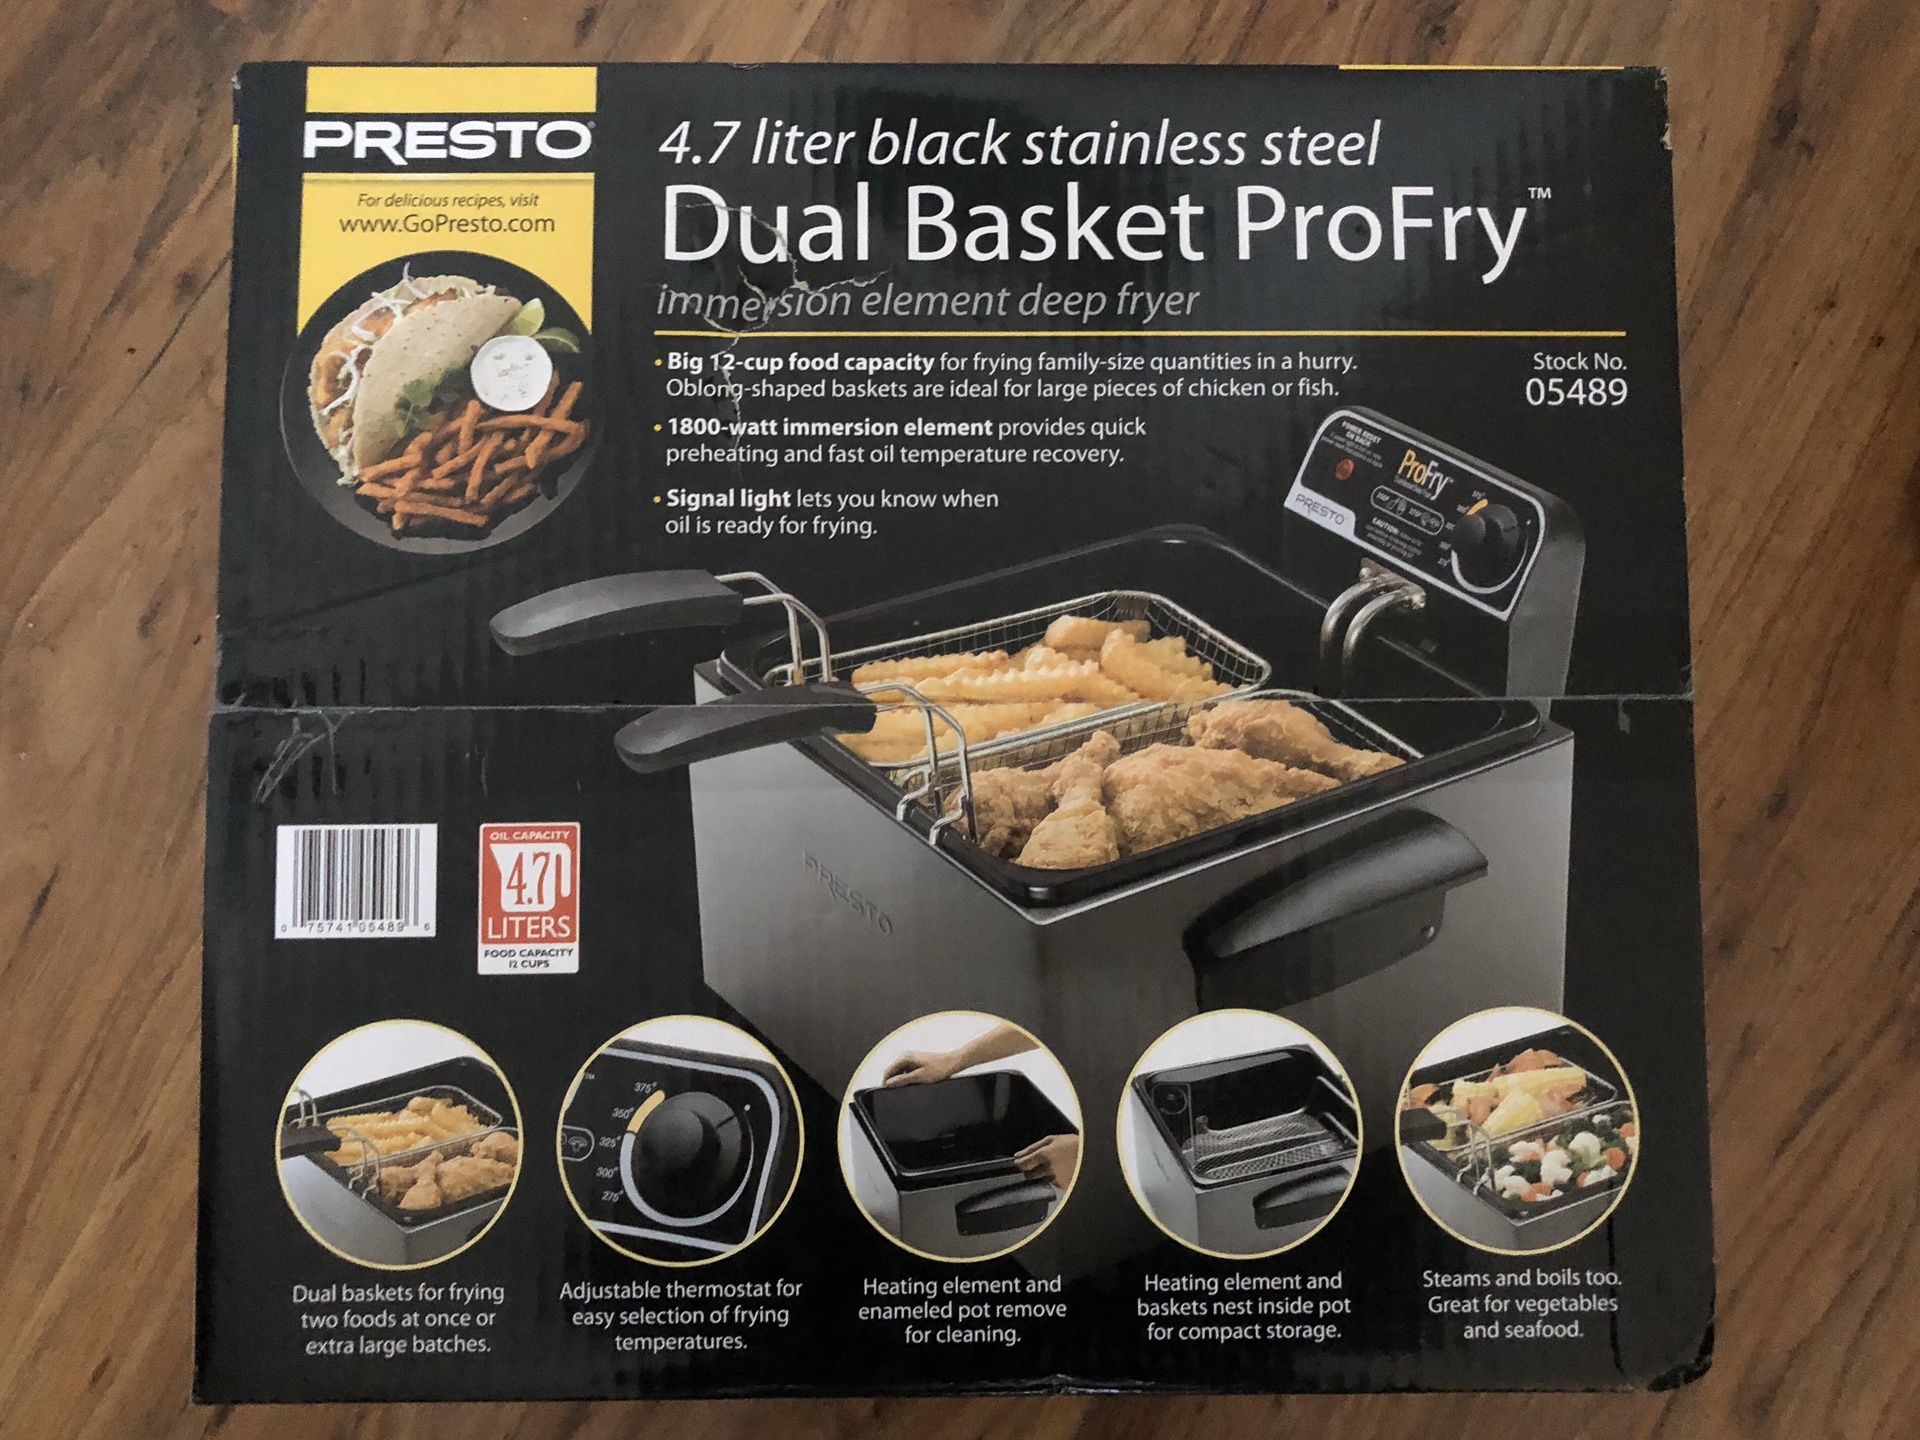 Brand new Presto duel basket deep fryer